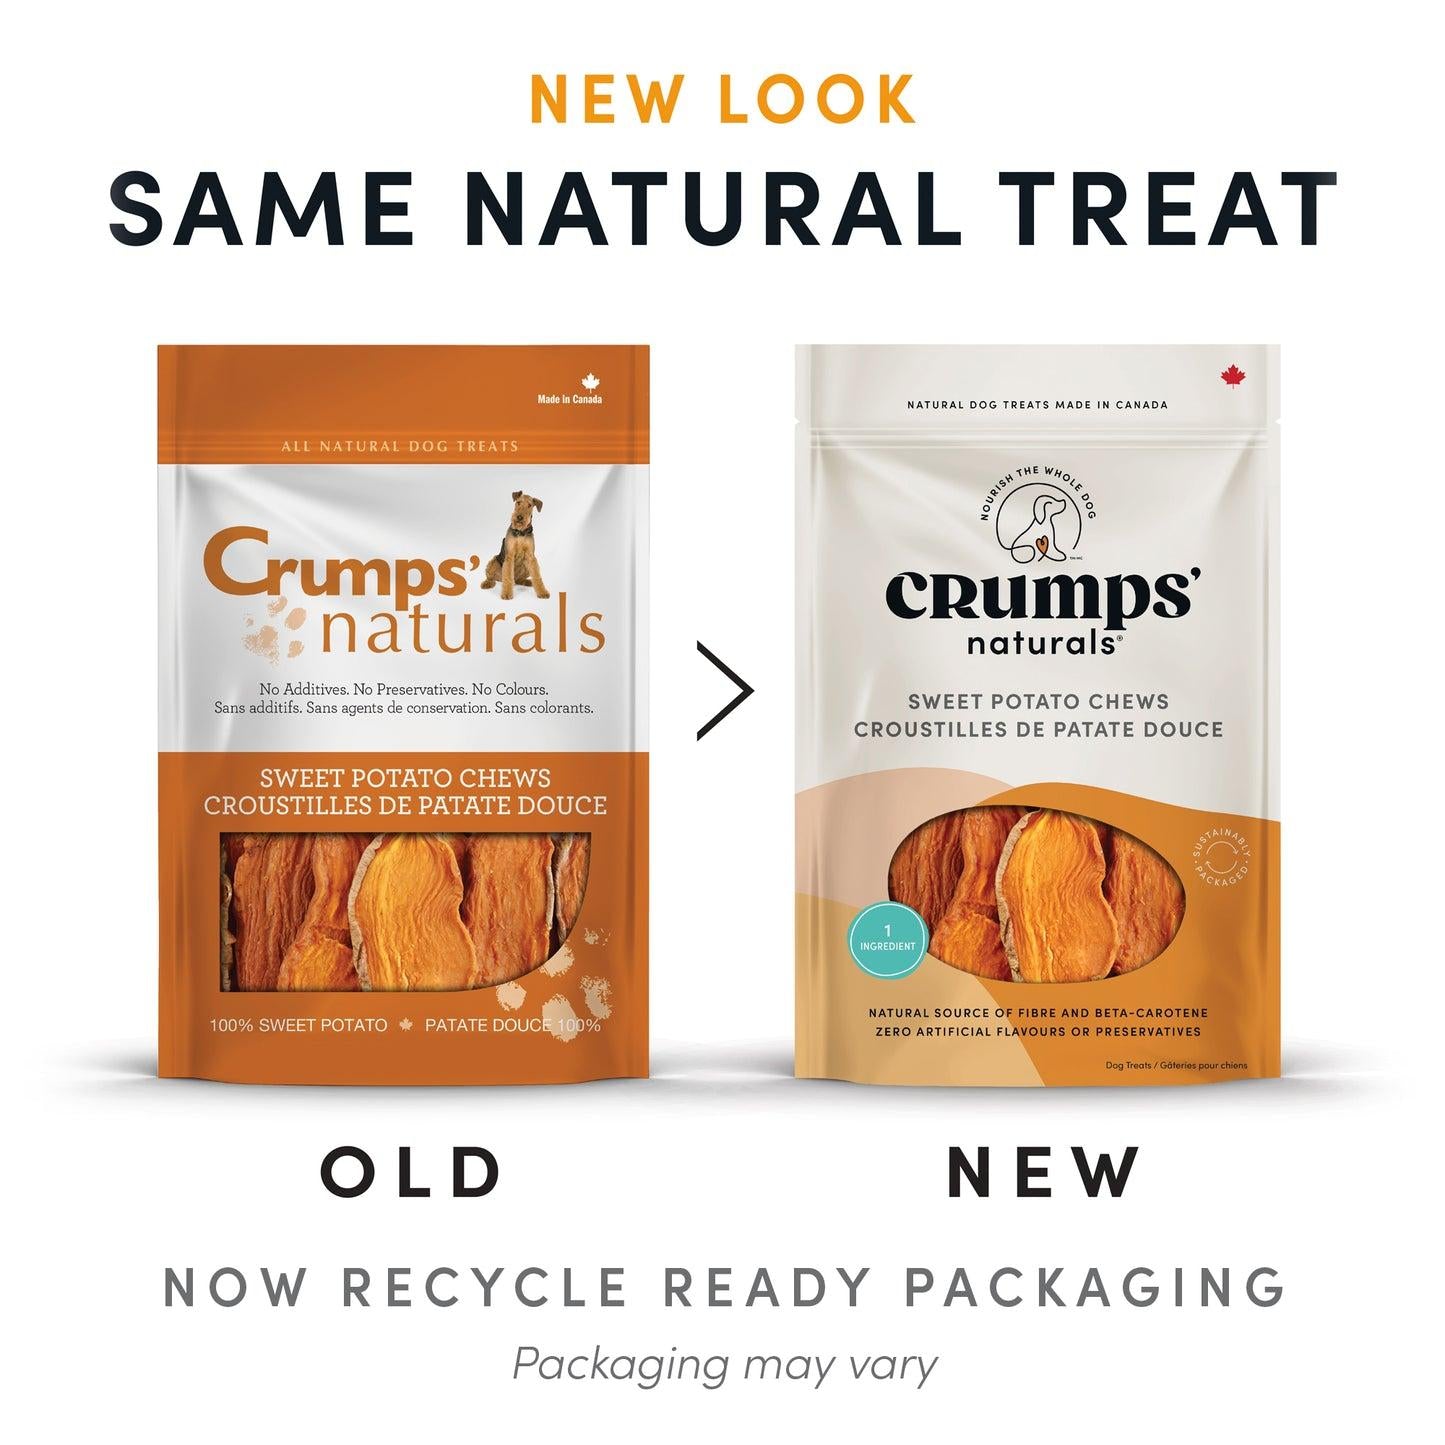 Crumps' Naturals Sweet Potato Chews Dog Treats, 160-gram (Size: 160-gram)